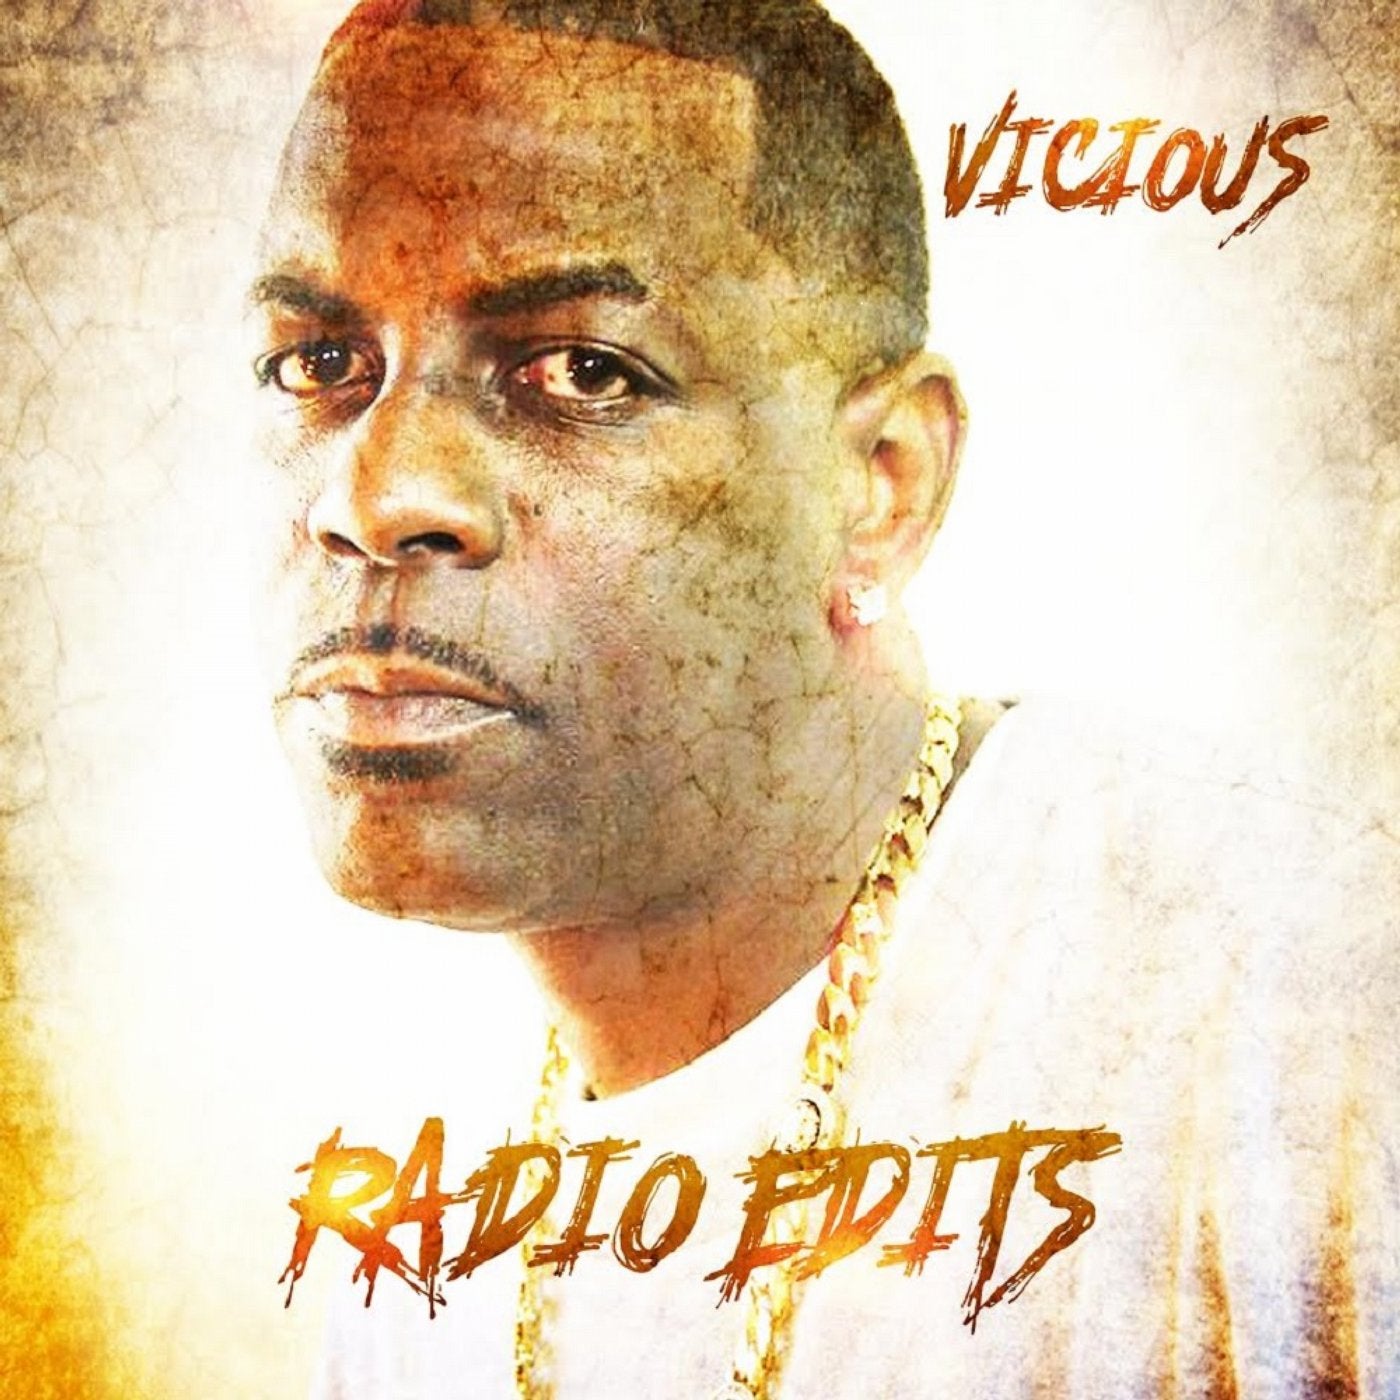 Vicious Radio Edits